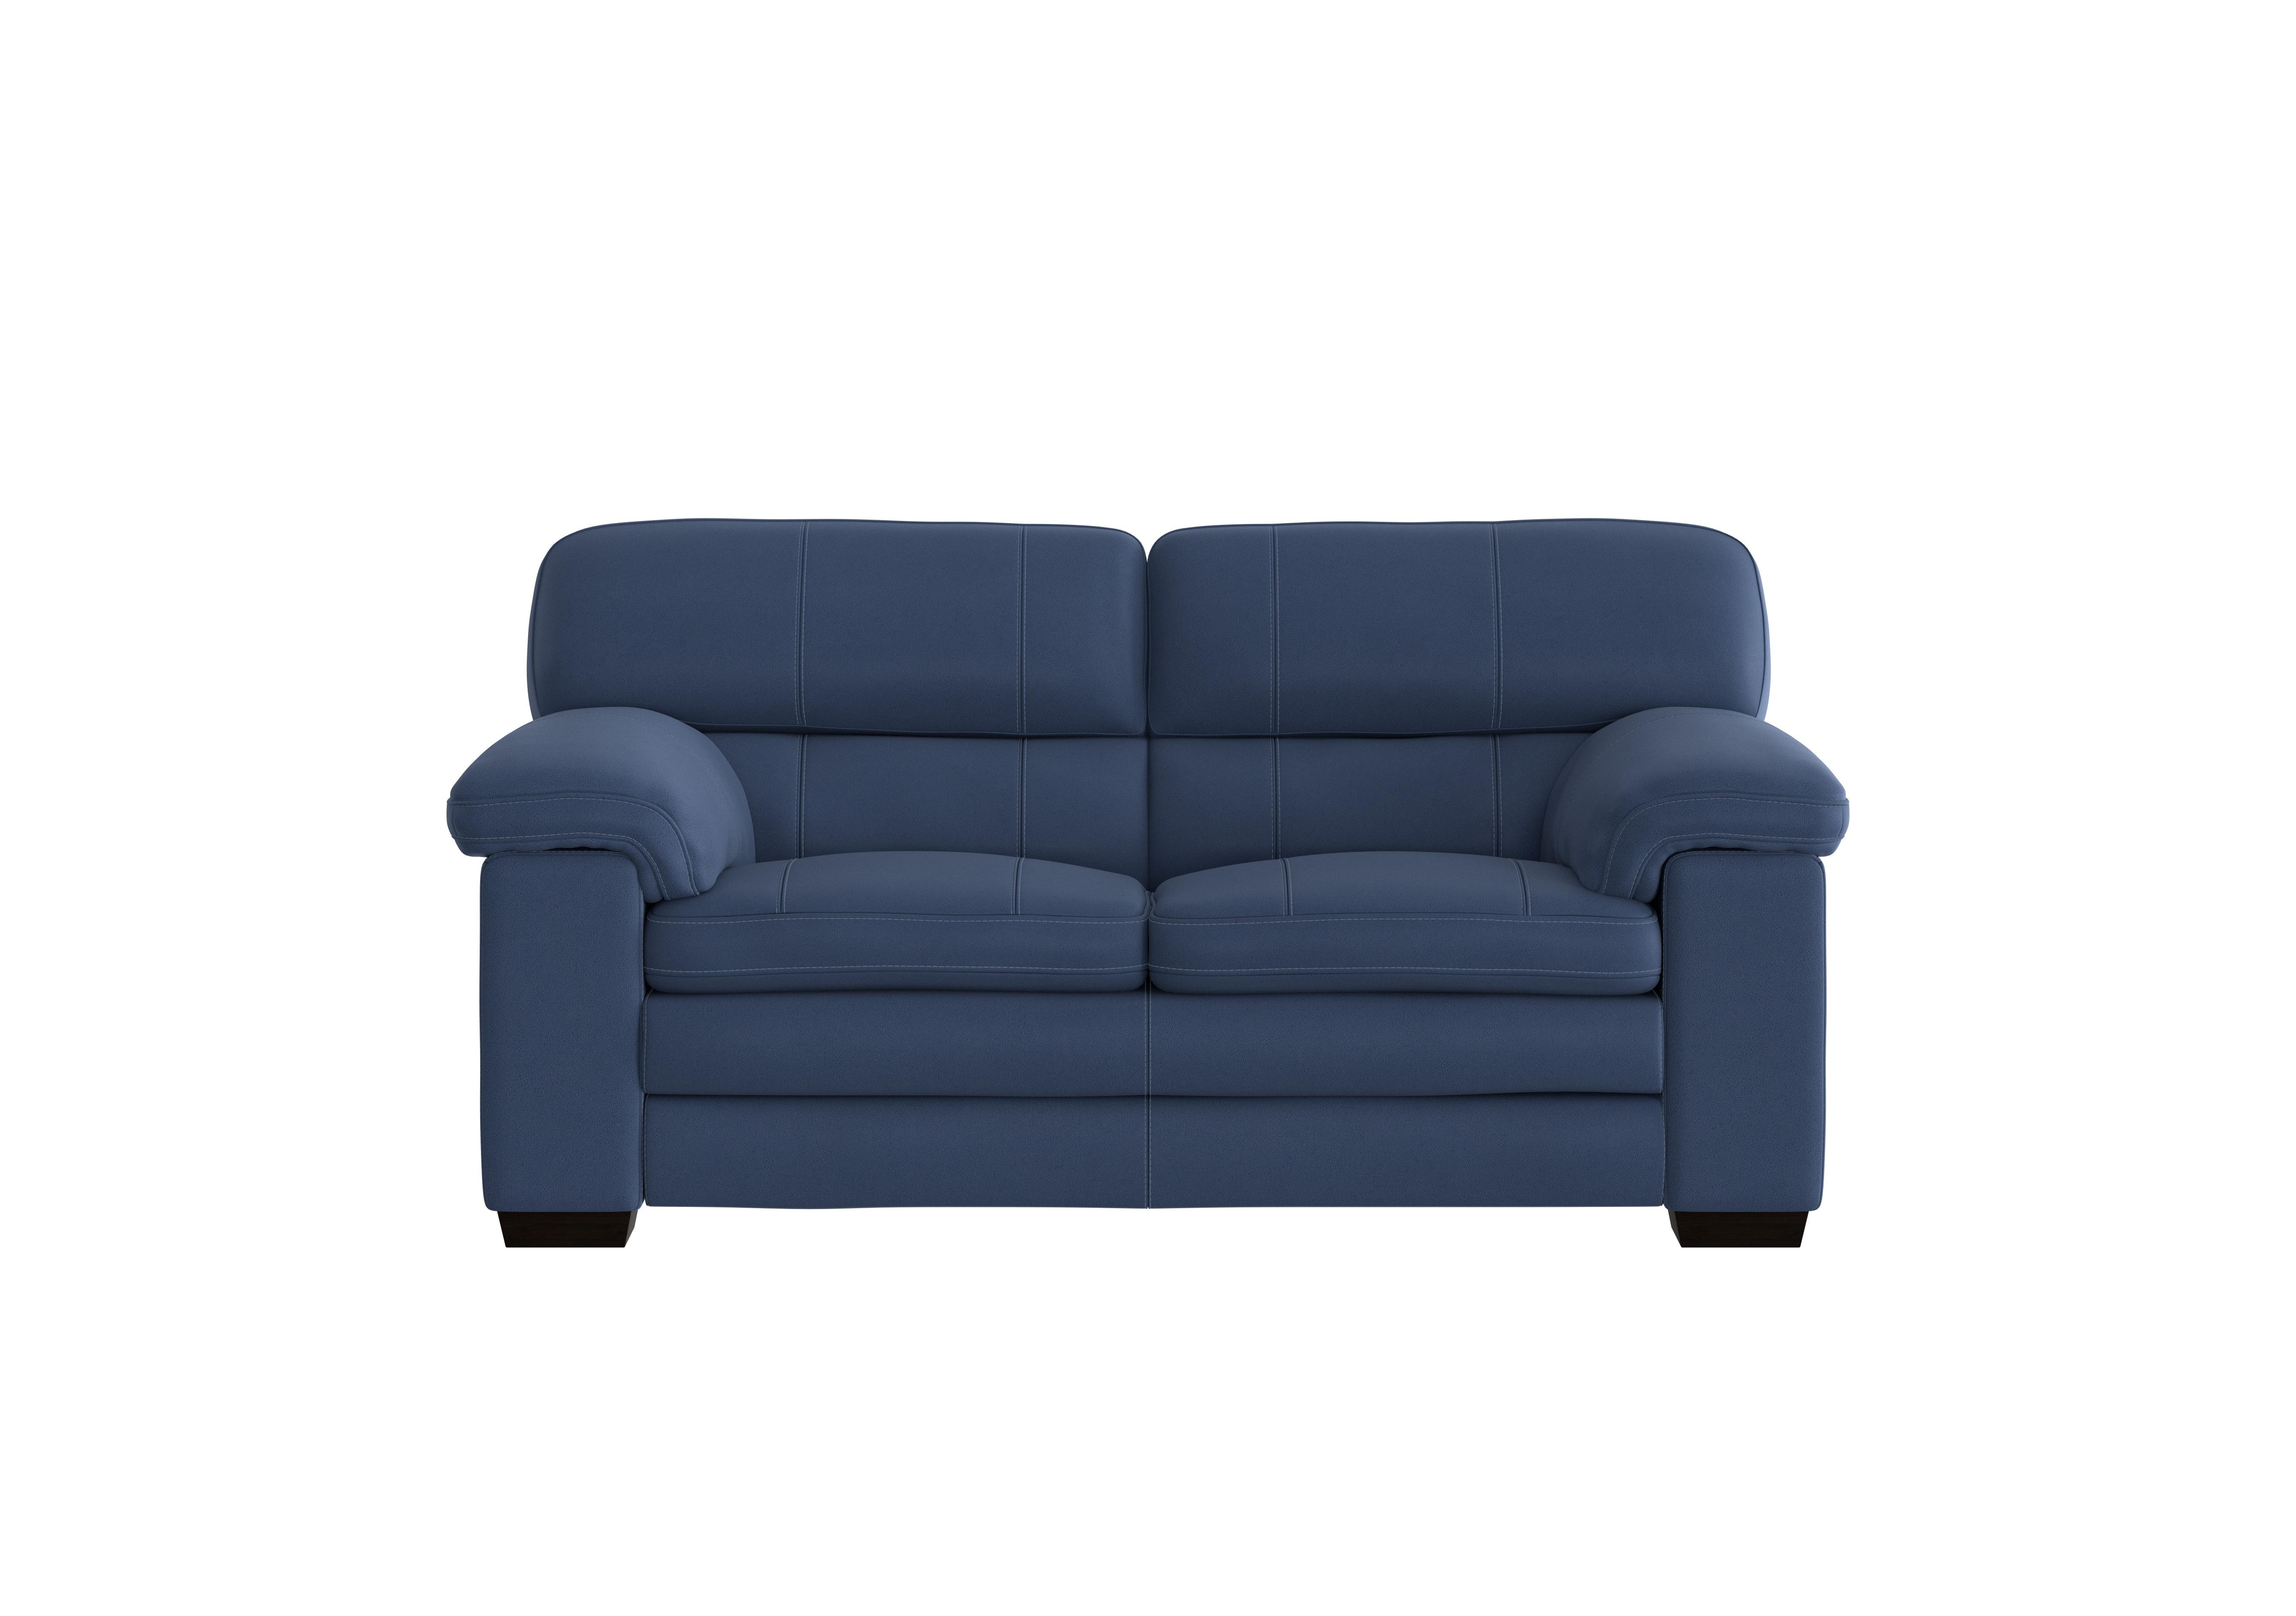 Cozee Fabric 2 Seater Sofa in Bfa-Blj-R10 Blue on Furniture Village